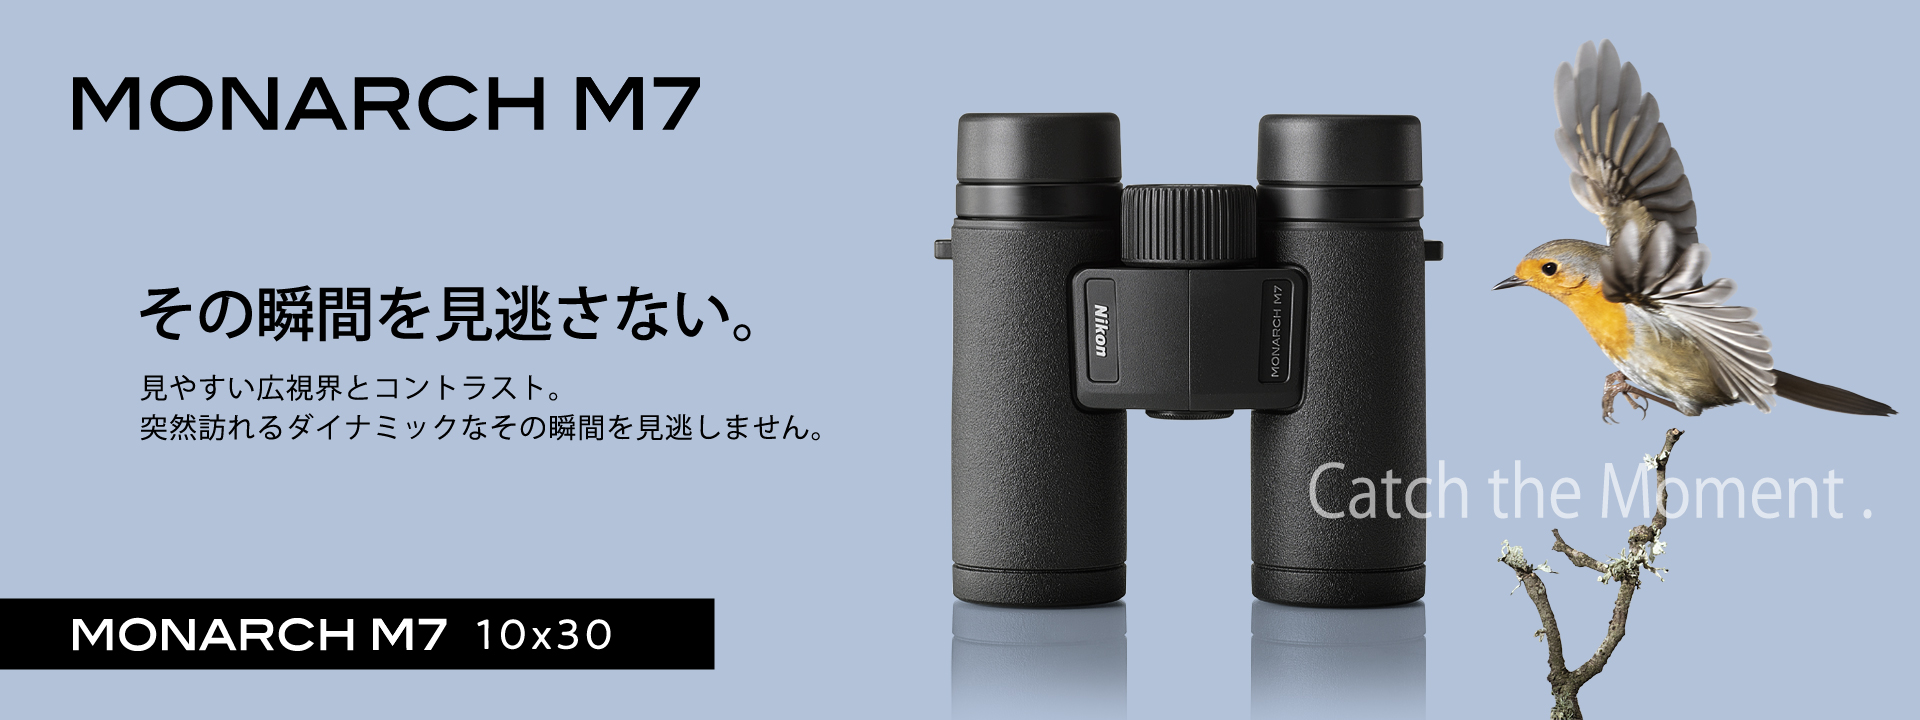 MONARCH M7 10x30